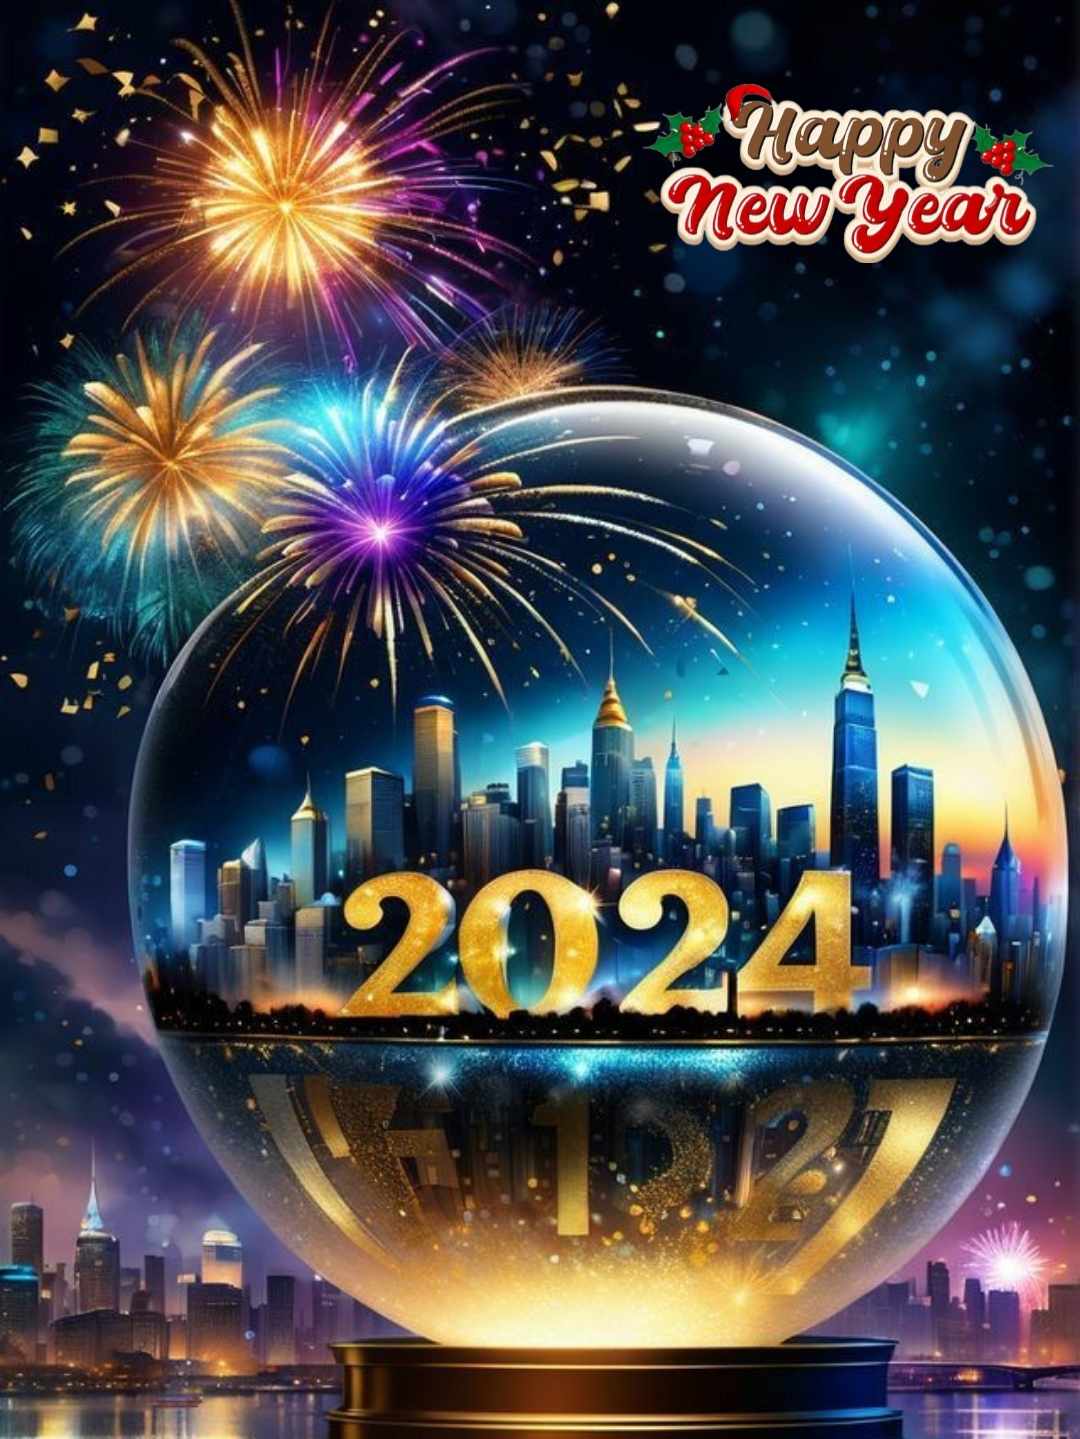 Happy New Year 2024 HD 4K Image